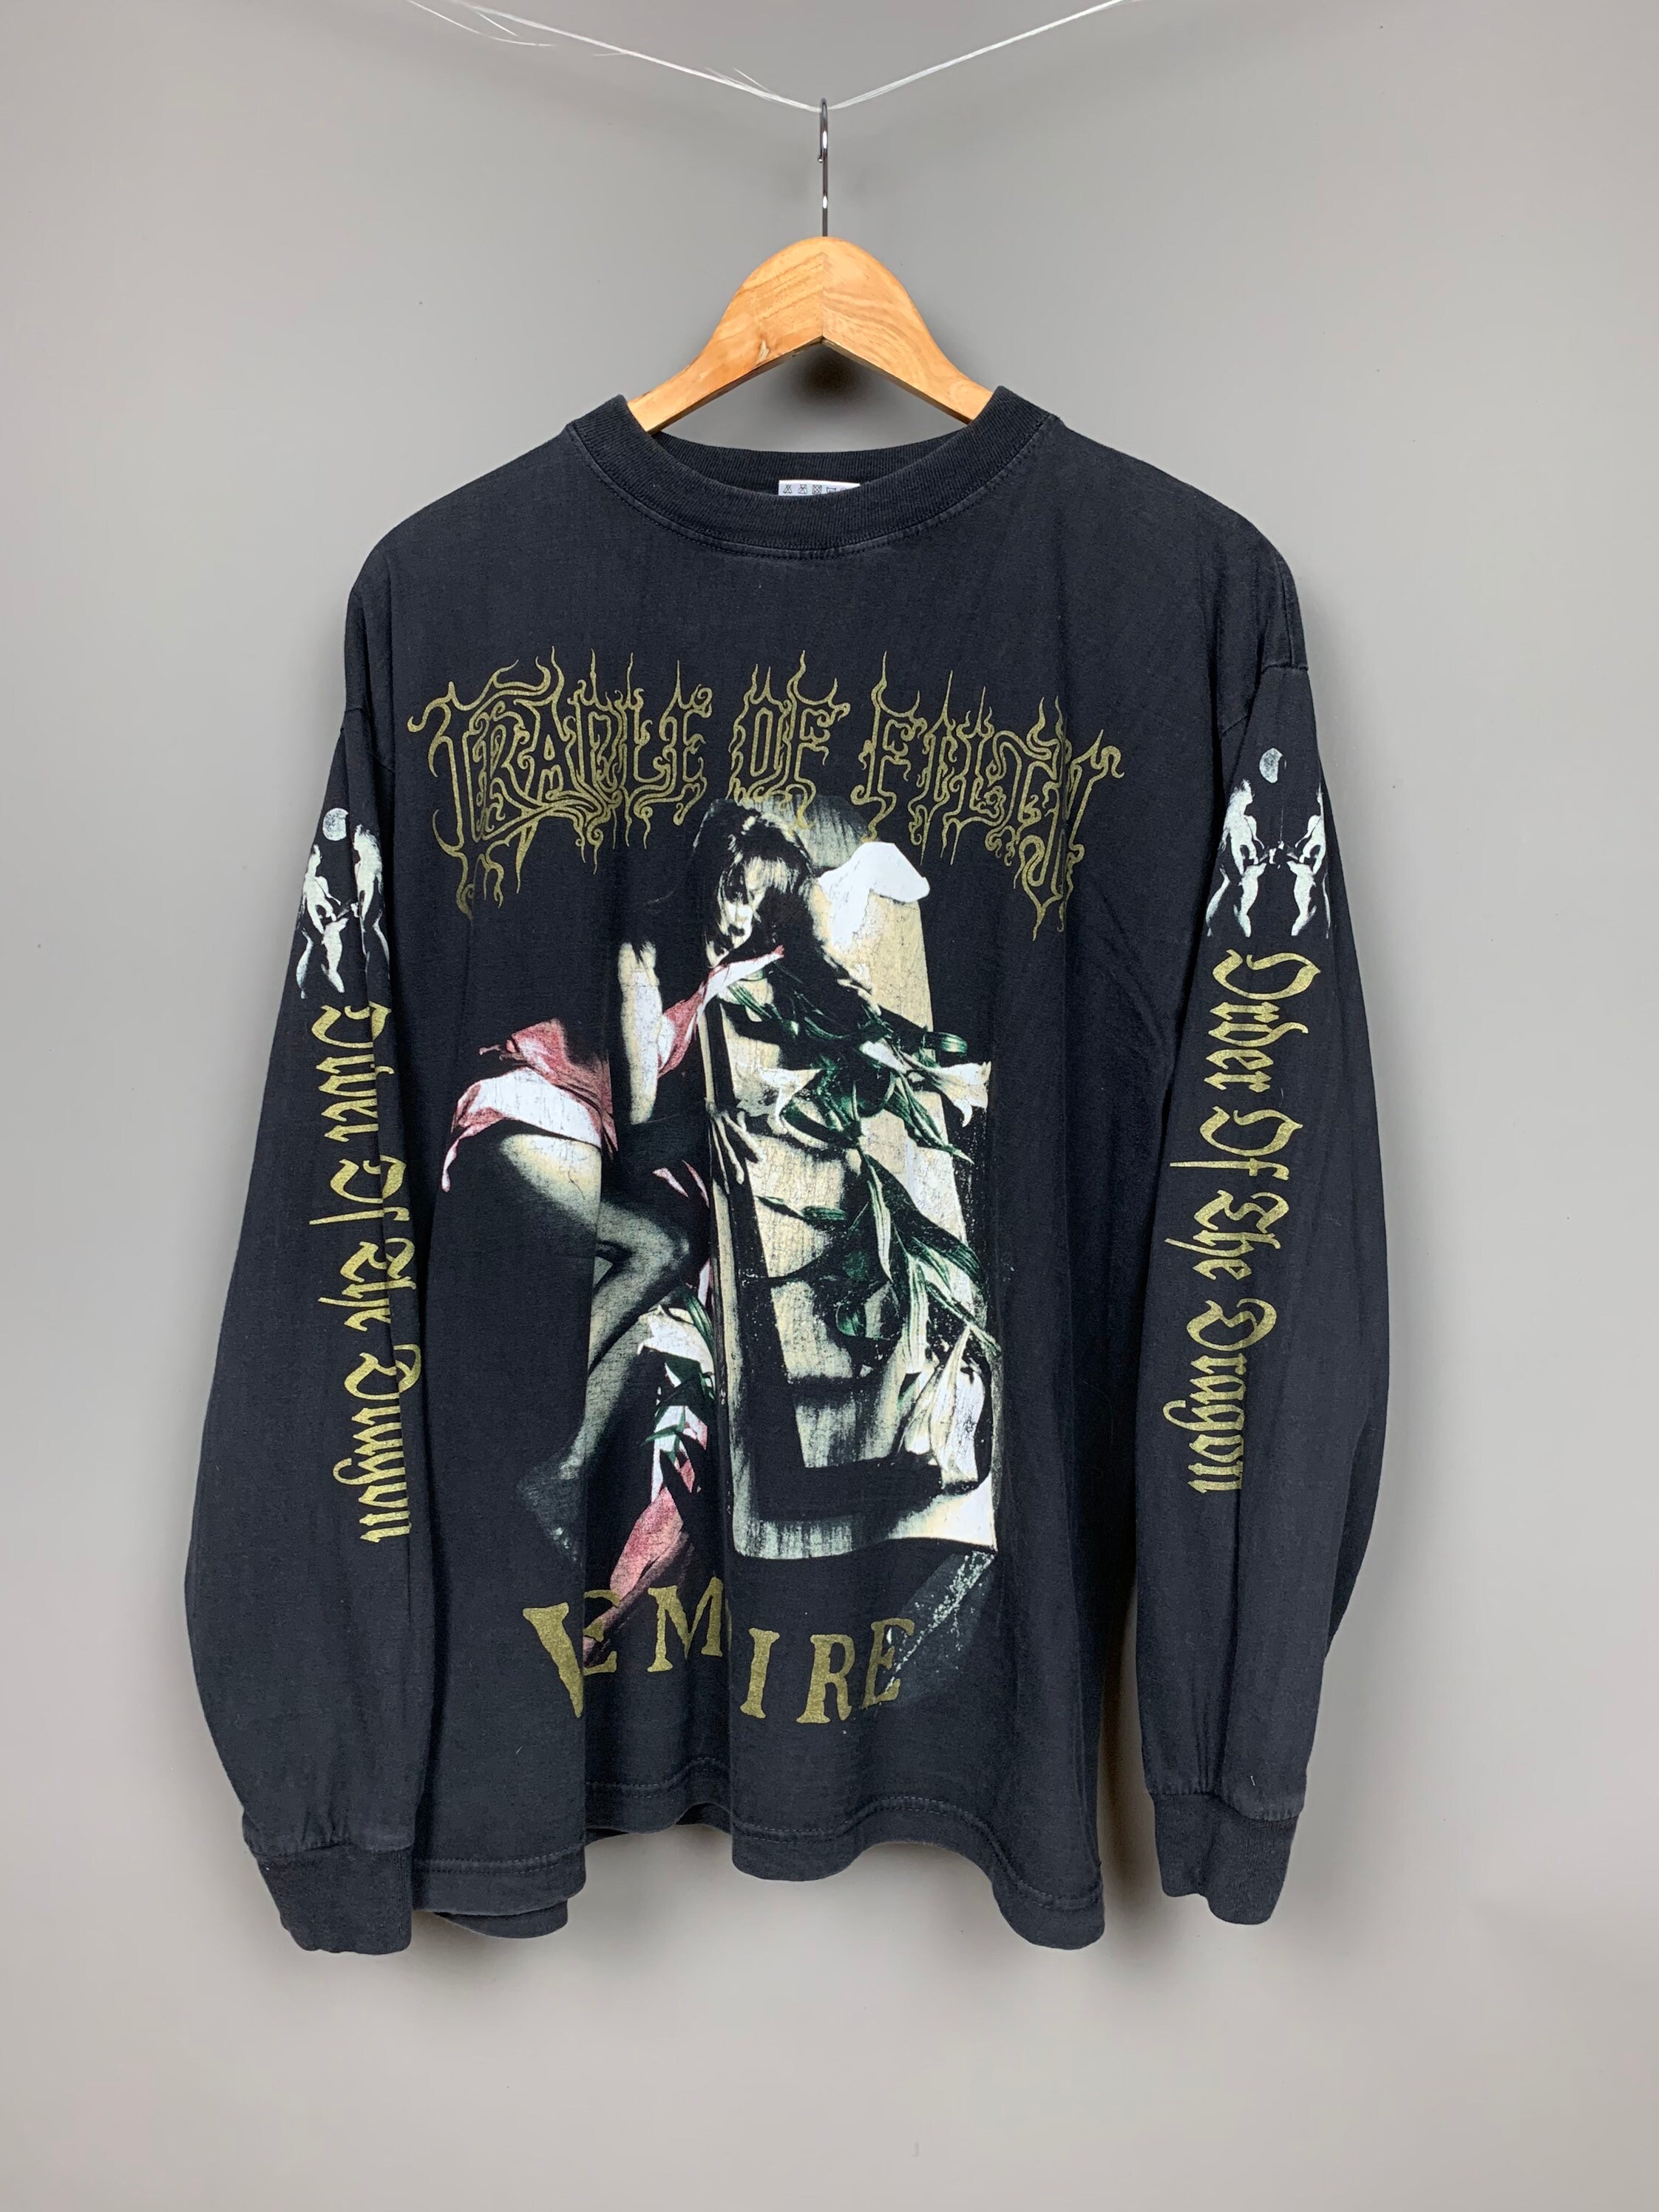 CRADLE OF FILTH 1996 Vempire Vintage Metal Longsleeve Shirt / | Etsy